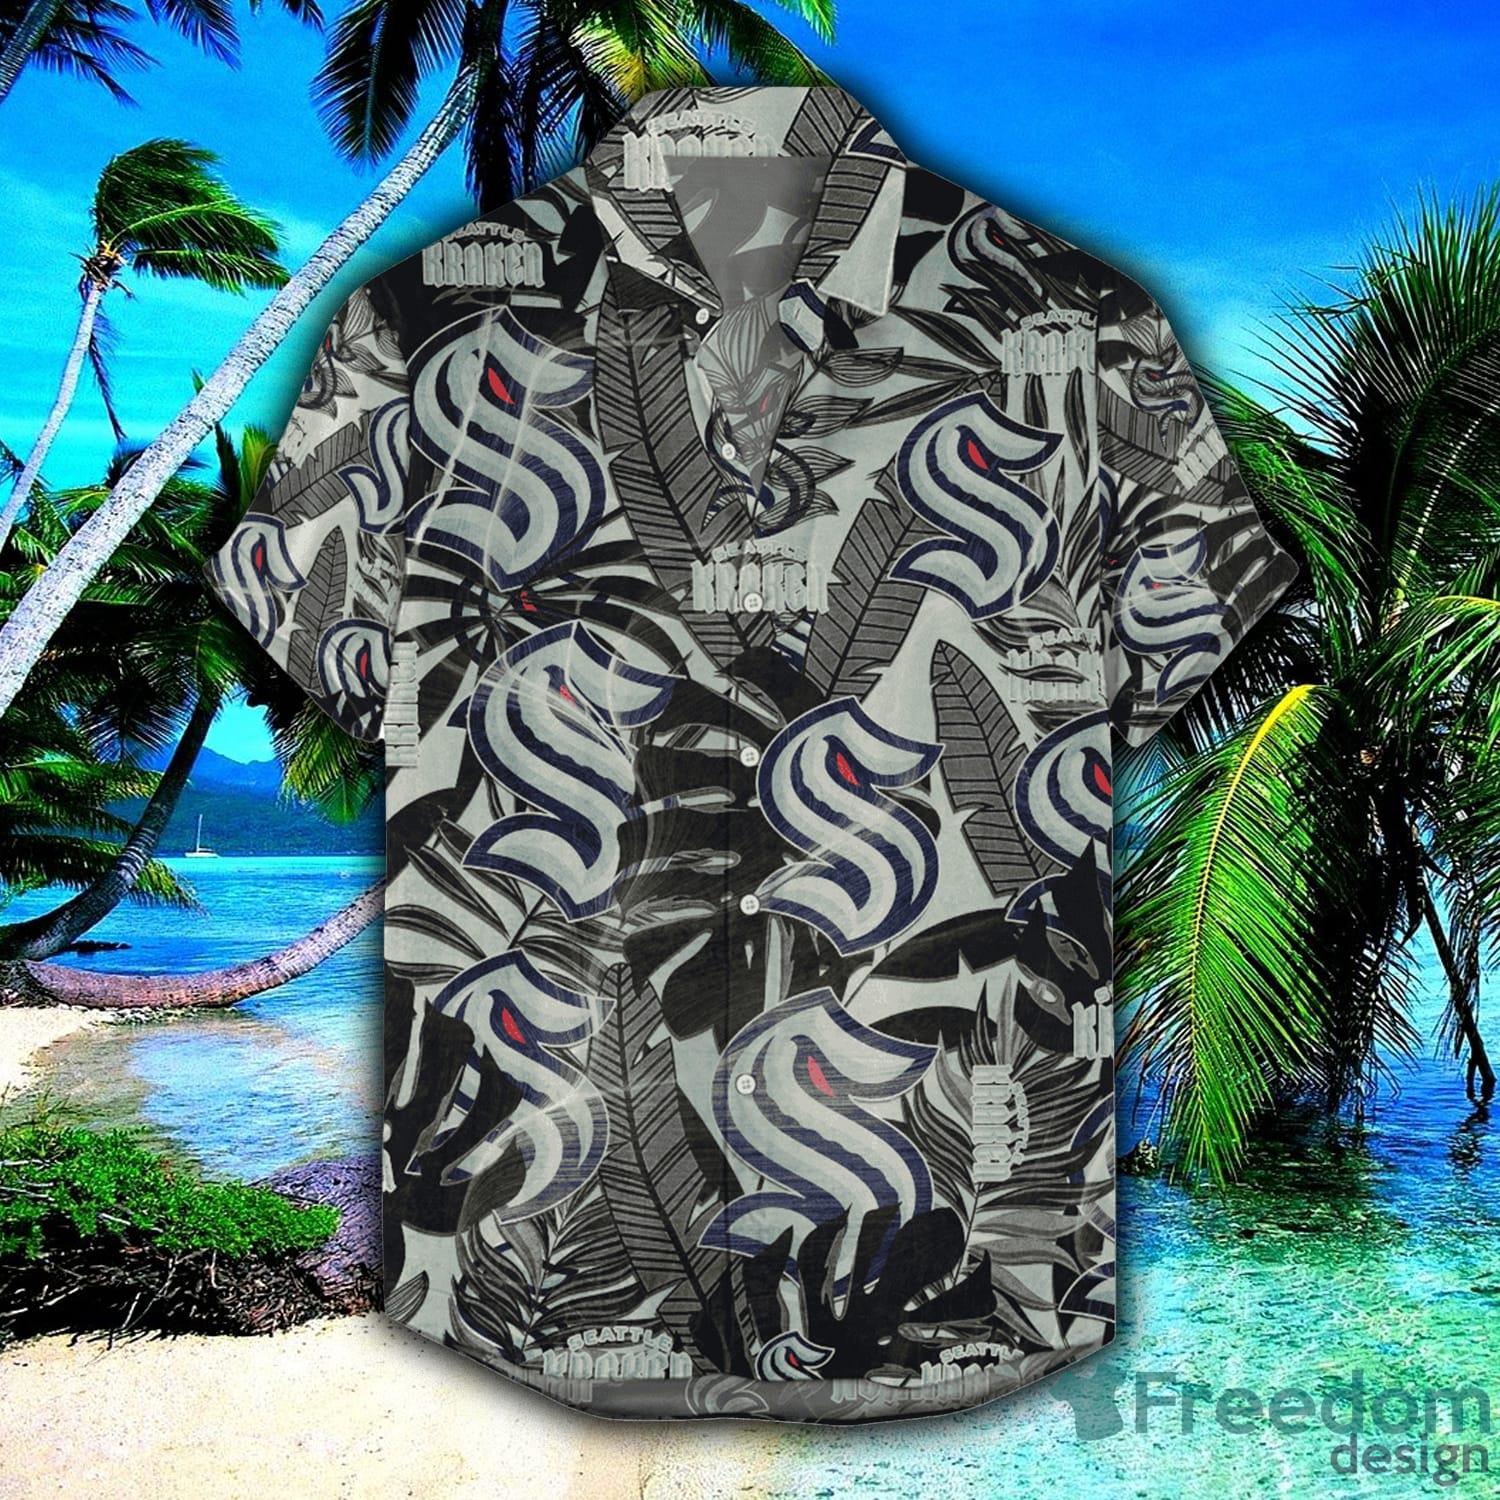 Seattle Kraken Retro NHL 3D Hawaiian Shirt And Shorts For Men And Women  Gift Fans - Freedomdesign